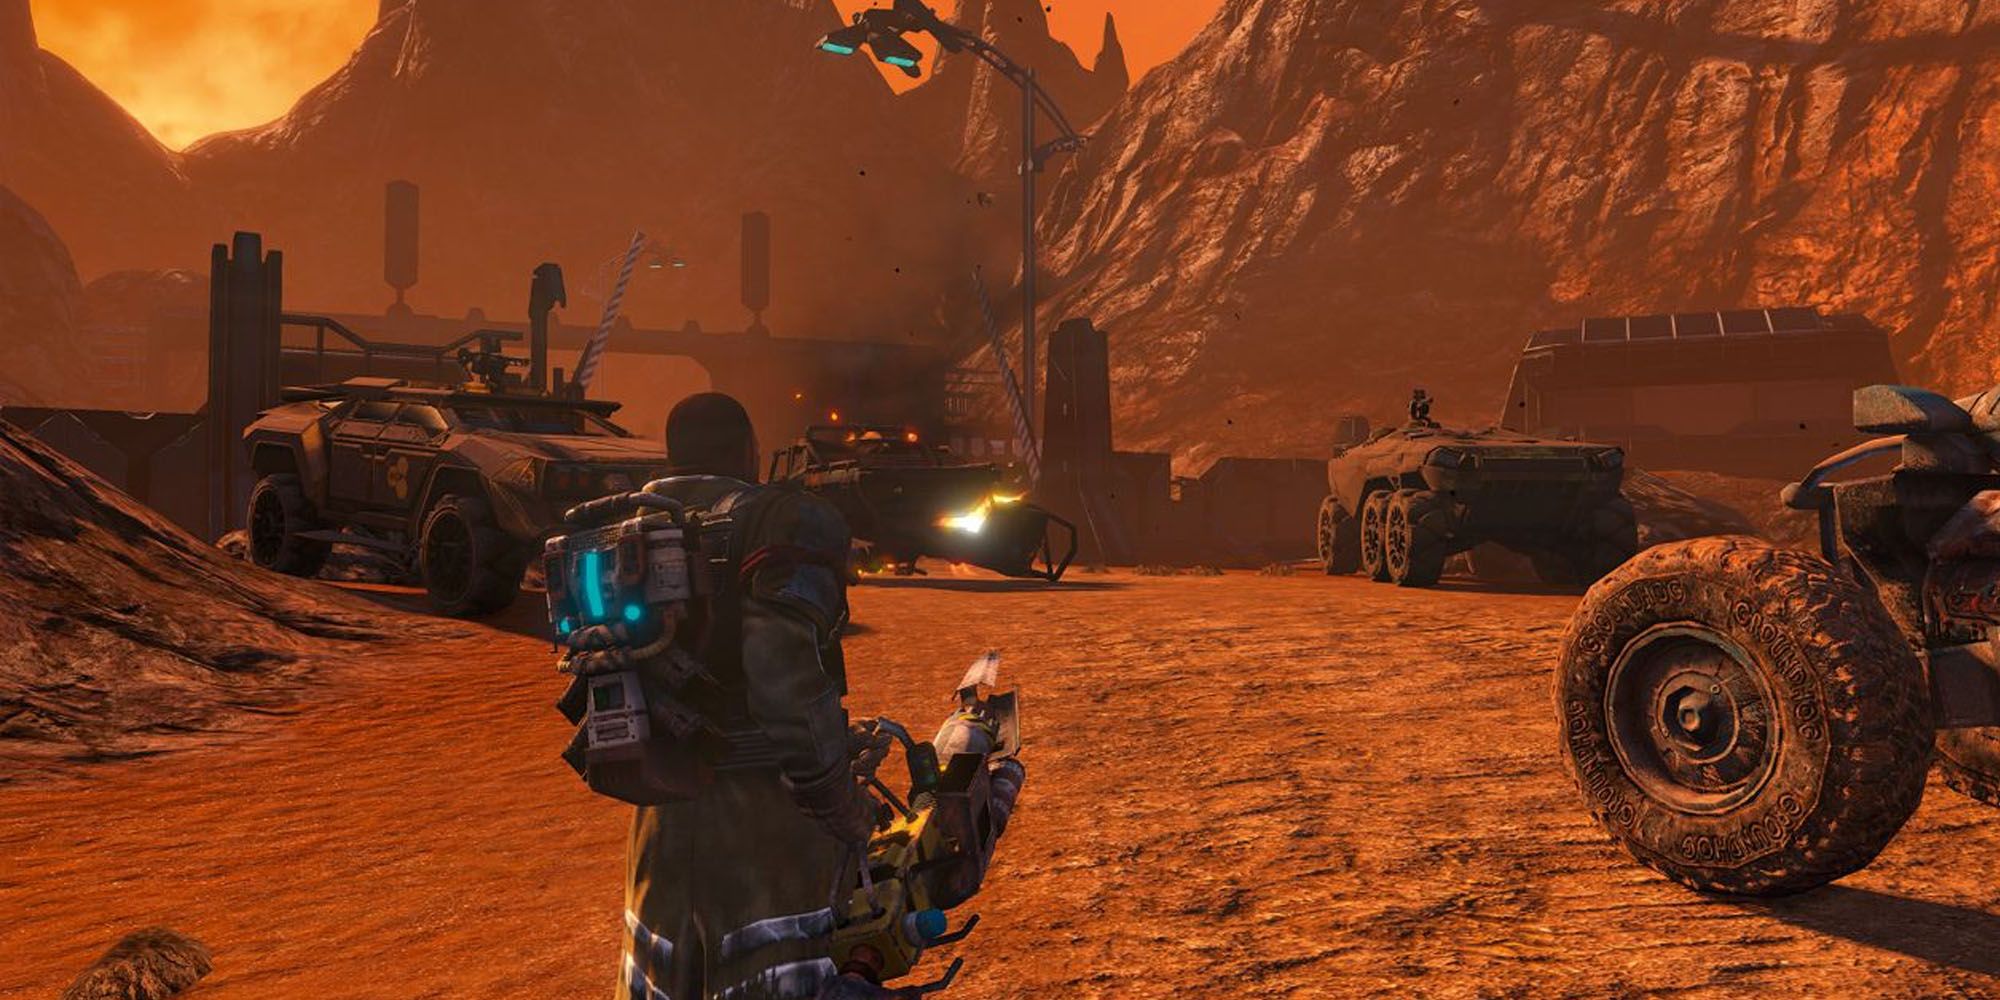 Player aiming gun on Mars surface